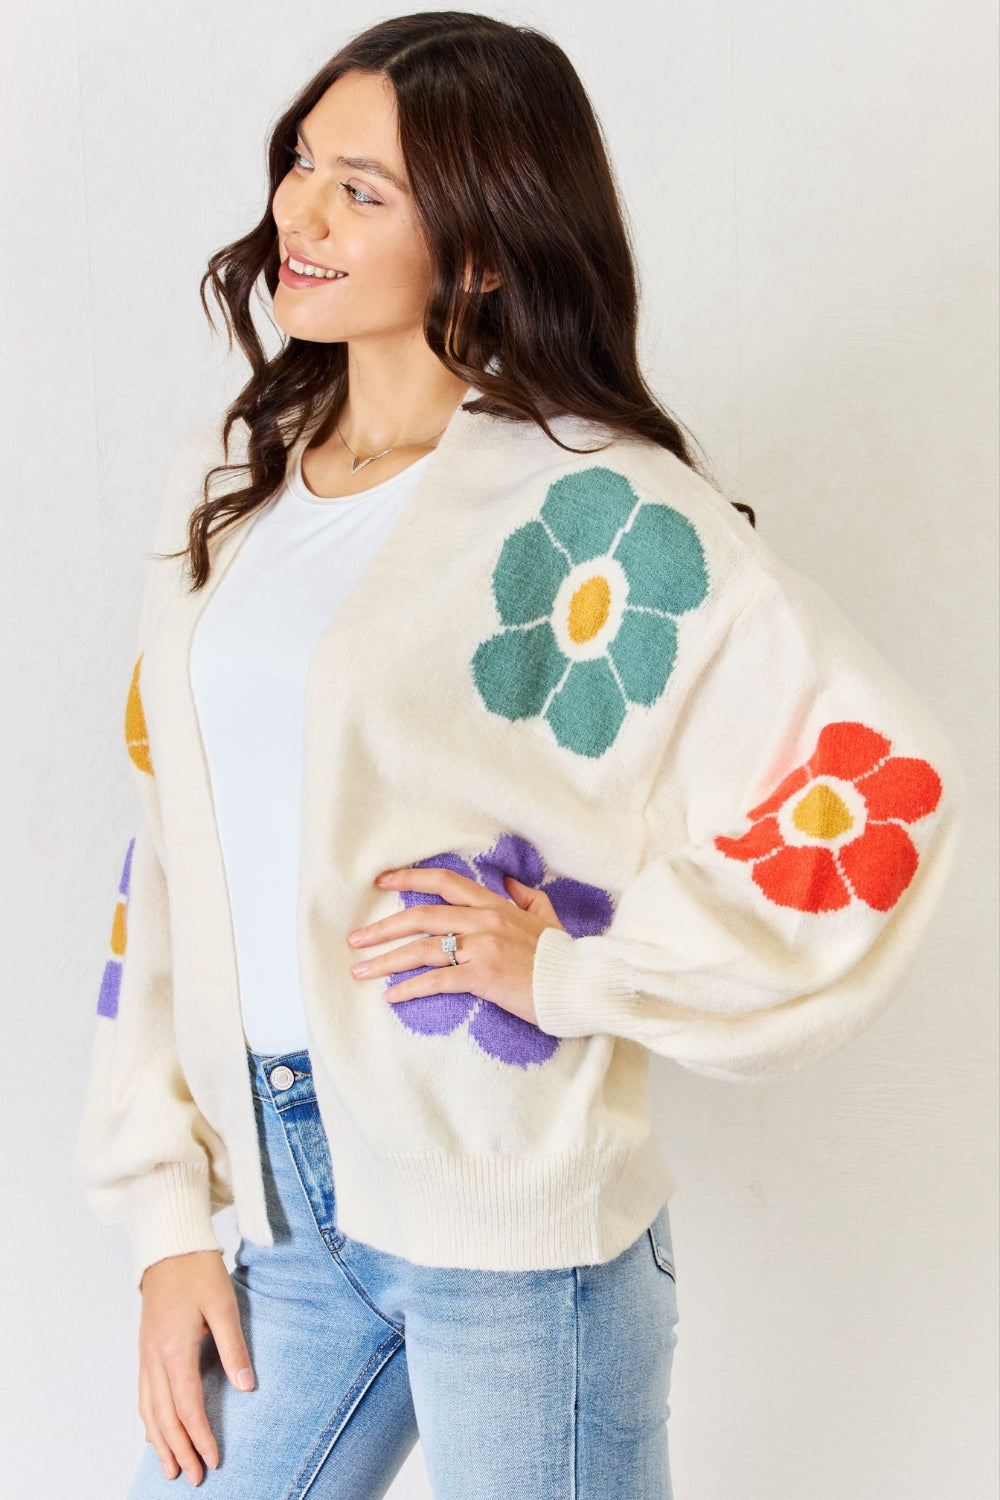 Flower Cardigan Sweater - Inspired Eye Boutique